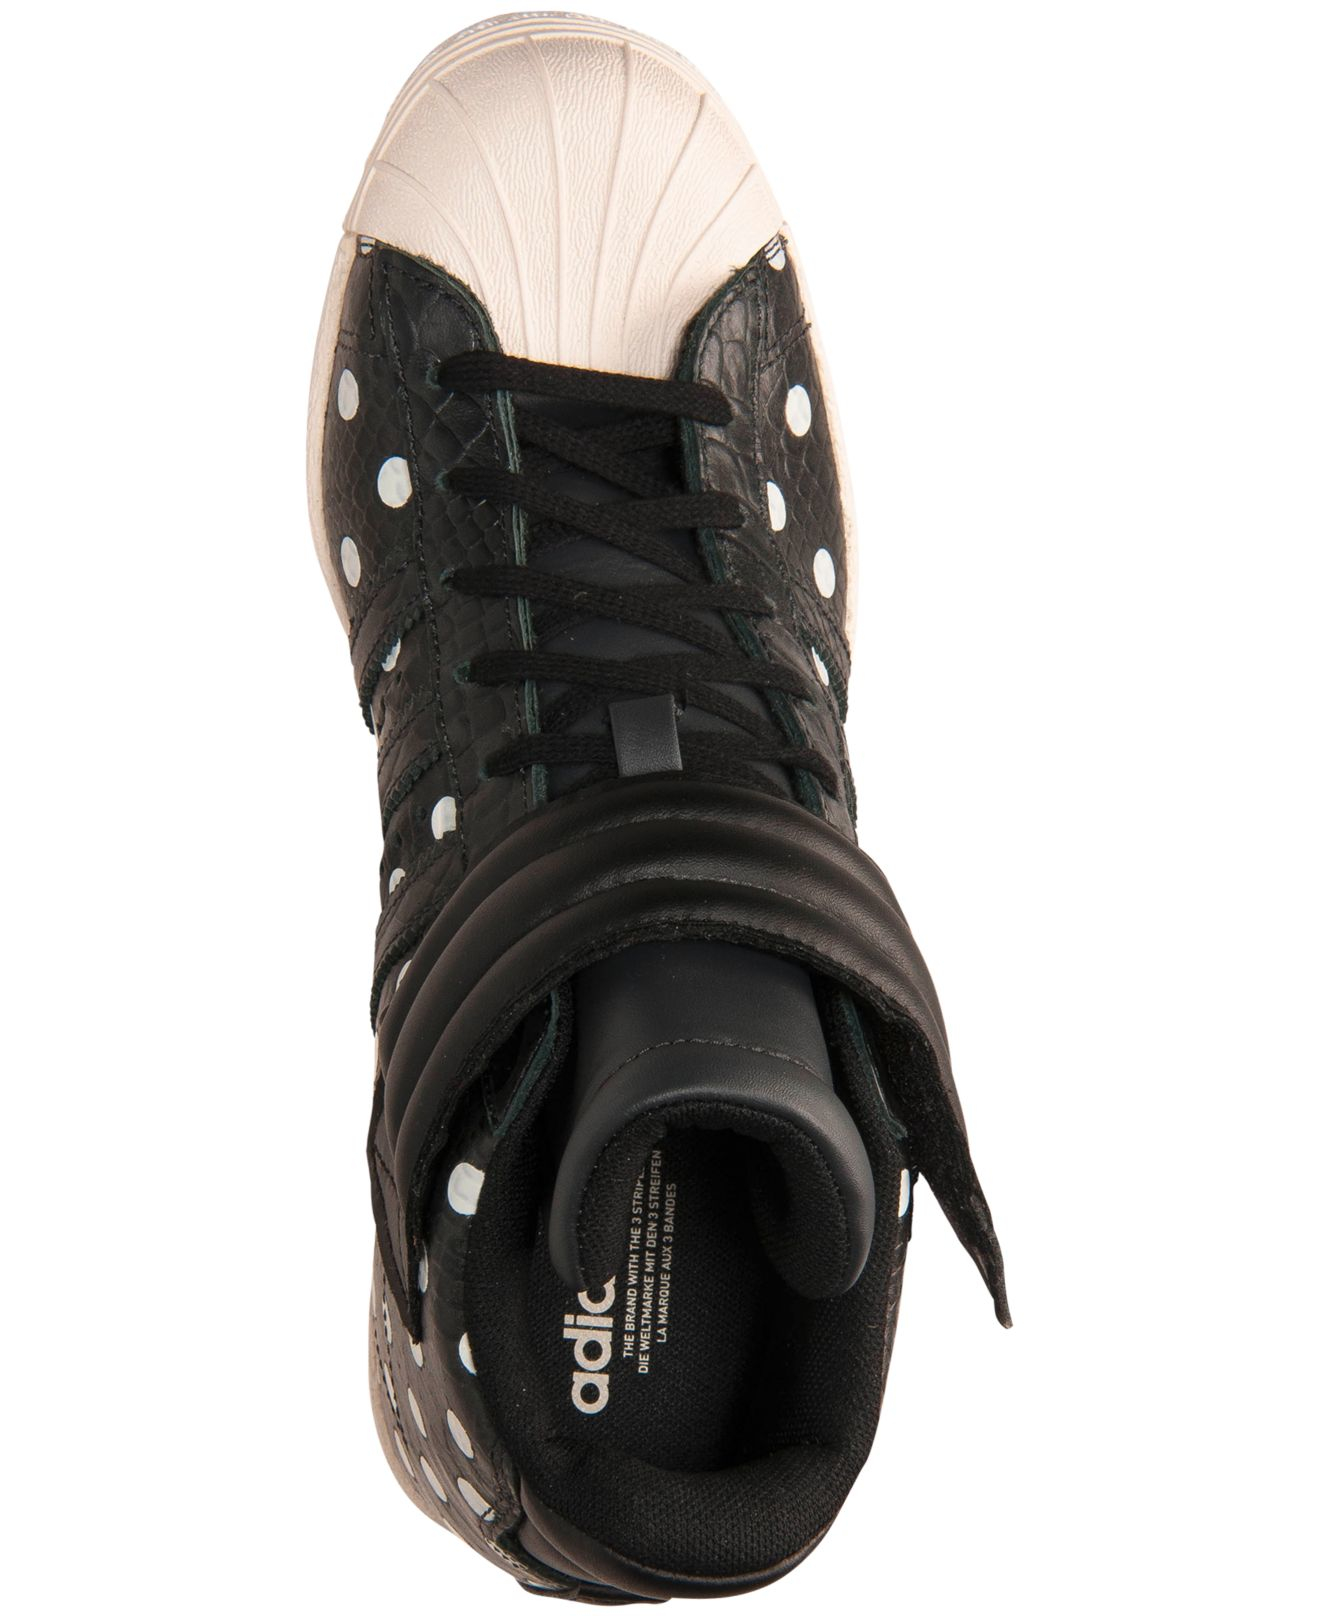 Adidas Originals Women's Superstar Up Shoes S79380,7 Amazon